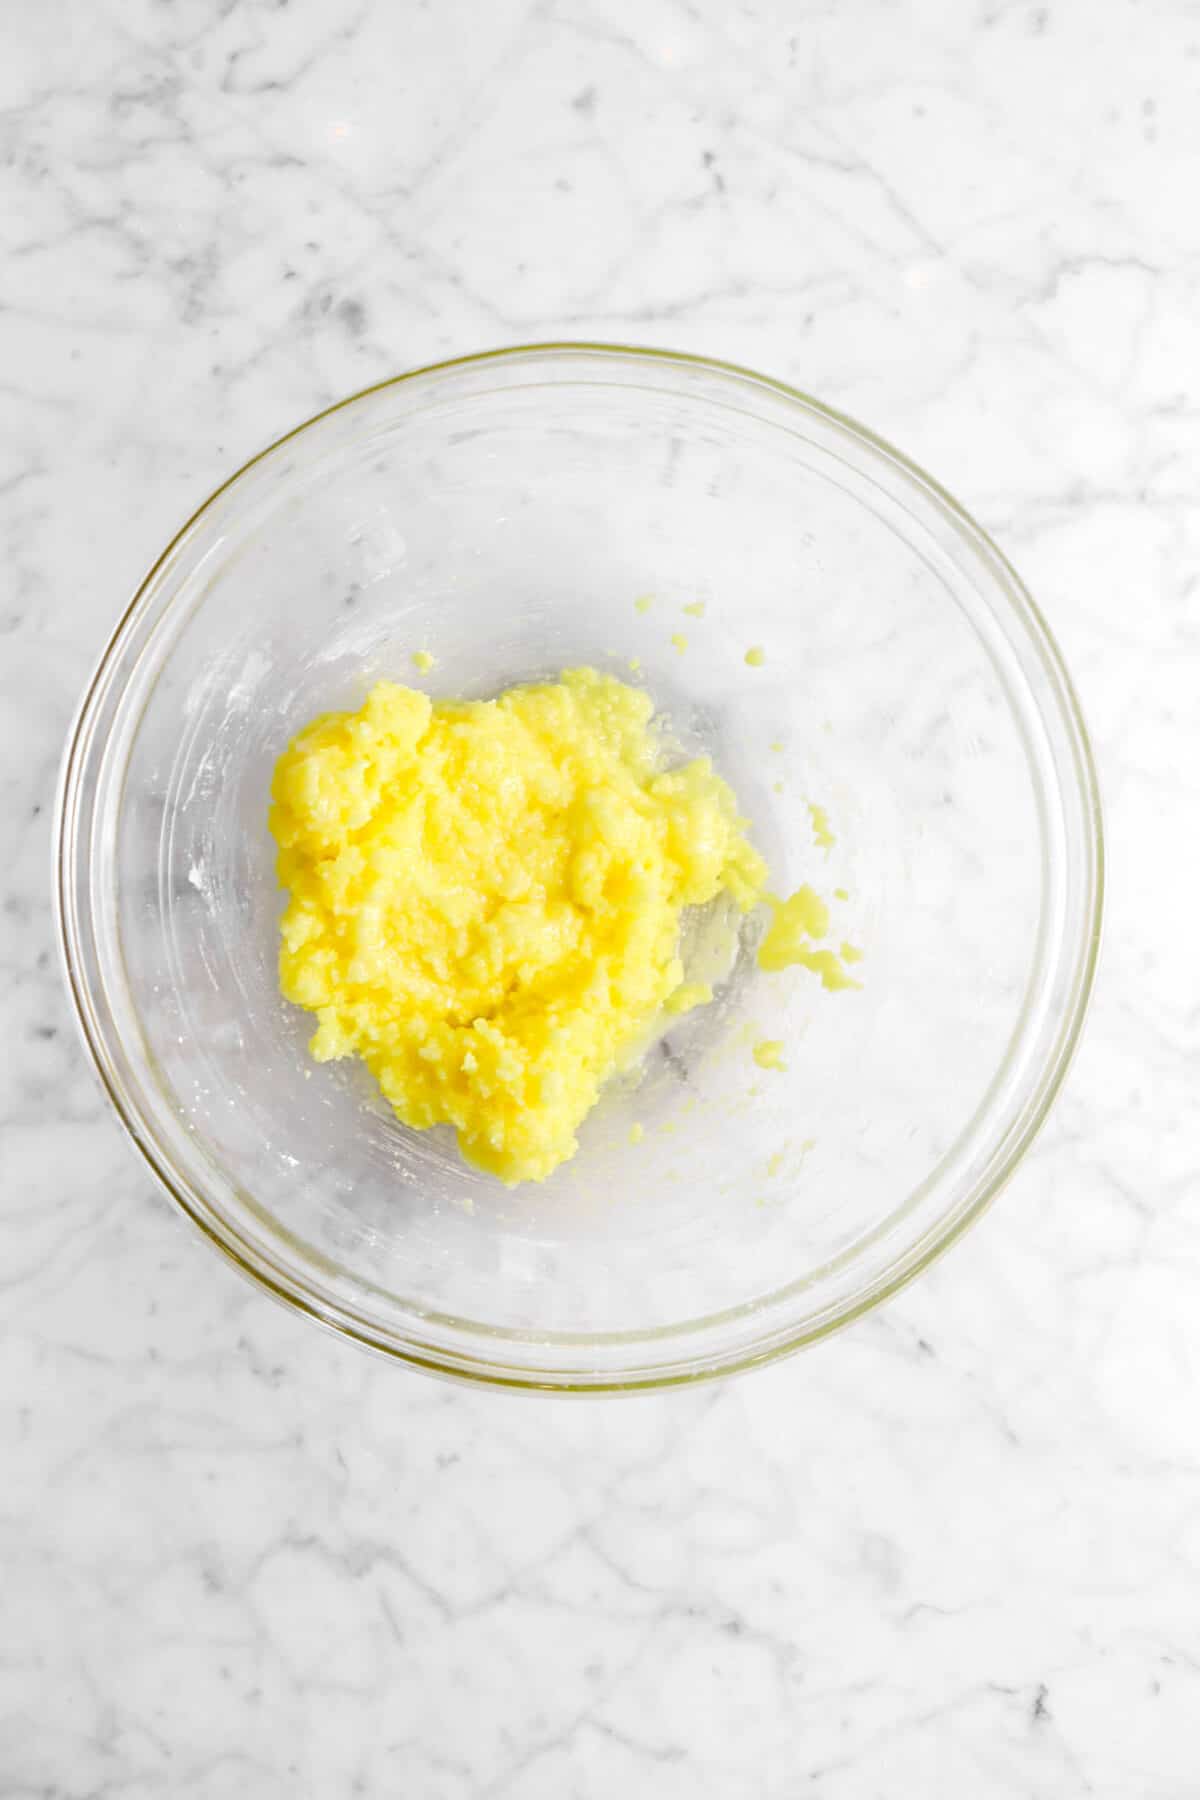 egg yolks stirred into corn starch mixture